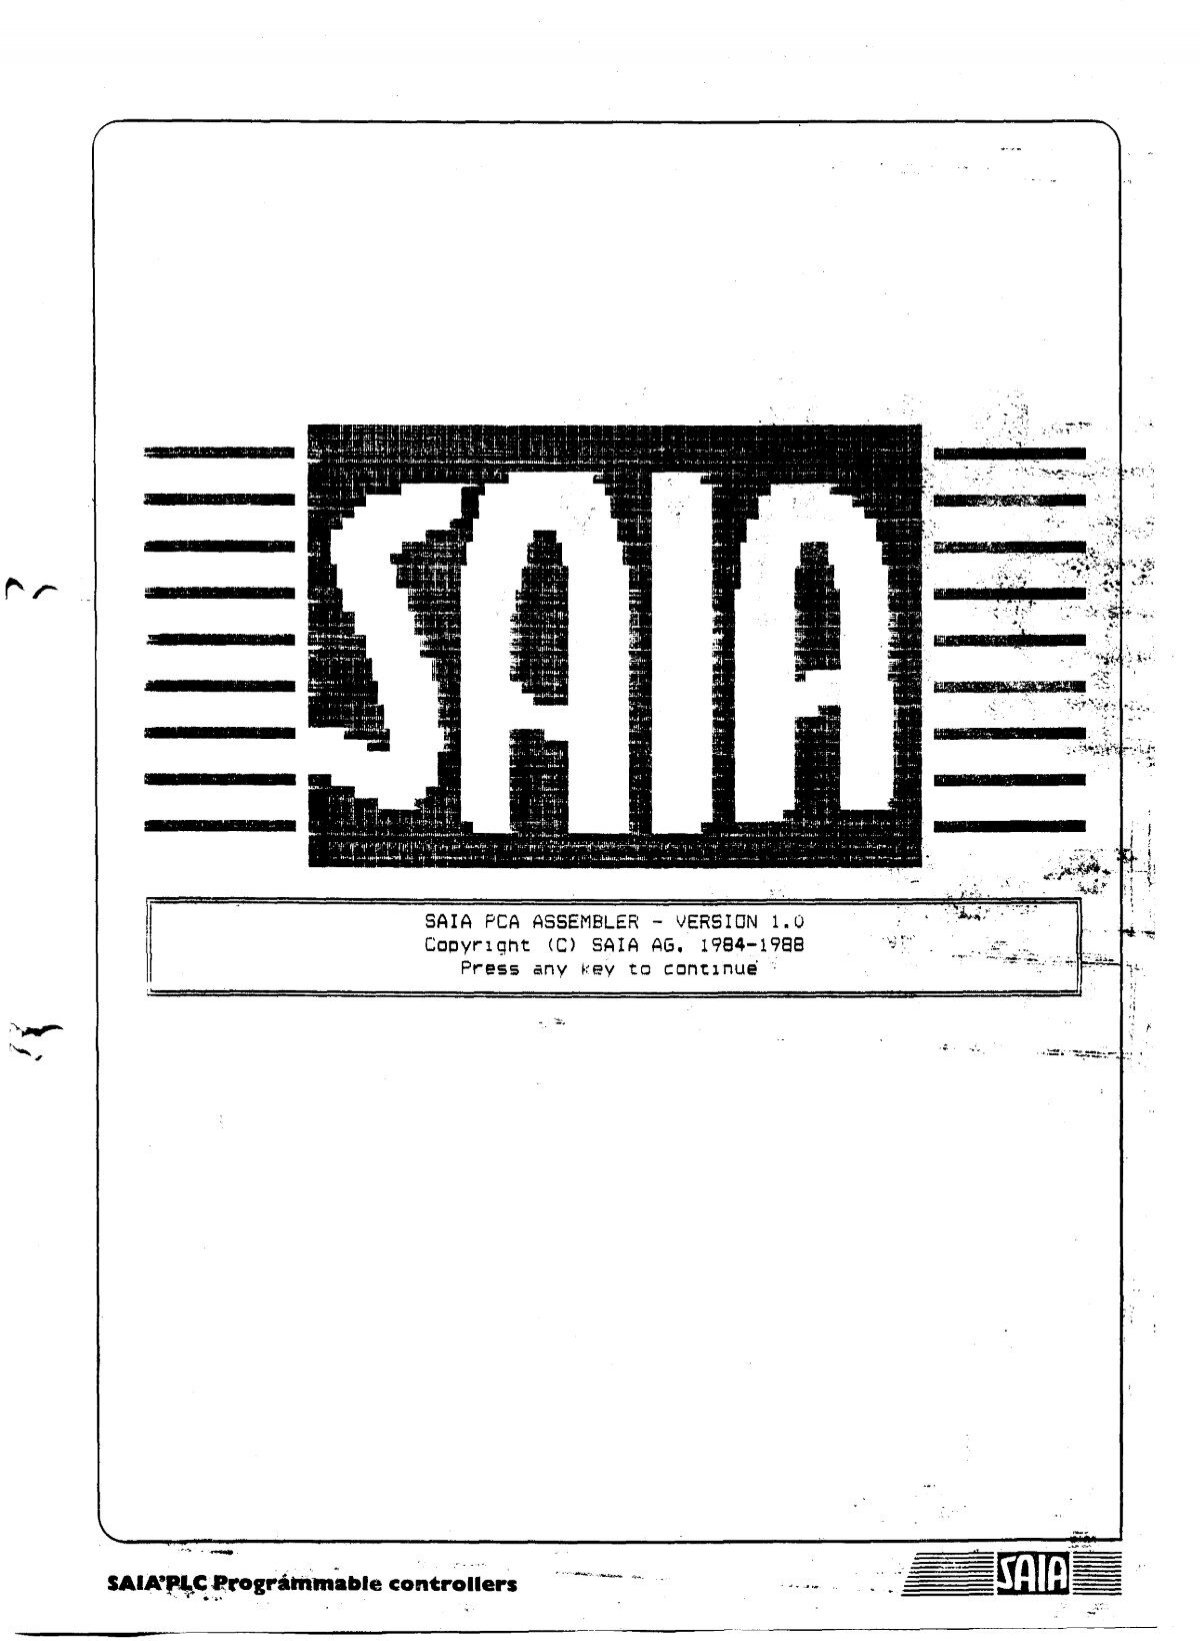 Saia Pca Assembler Version 1 0 Copyright C Sbc Support